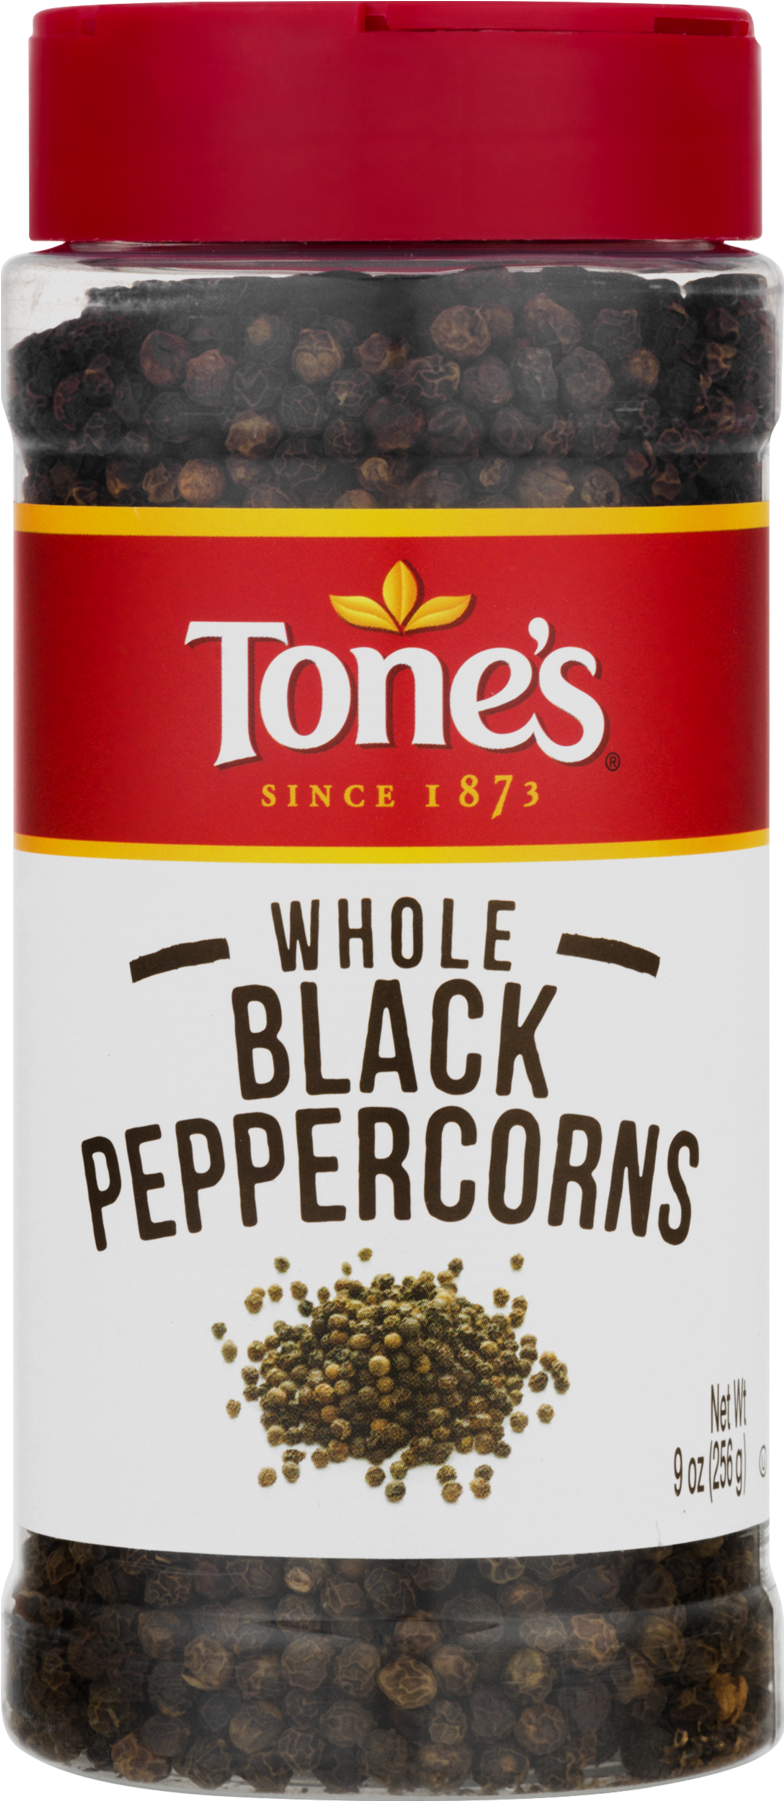 Tones Whole Black Peppercorns Container